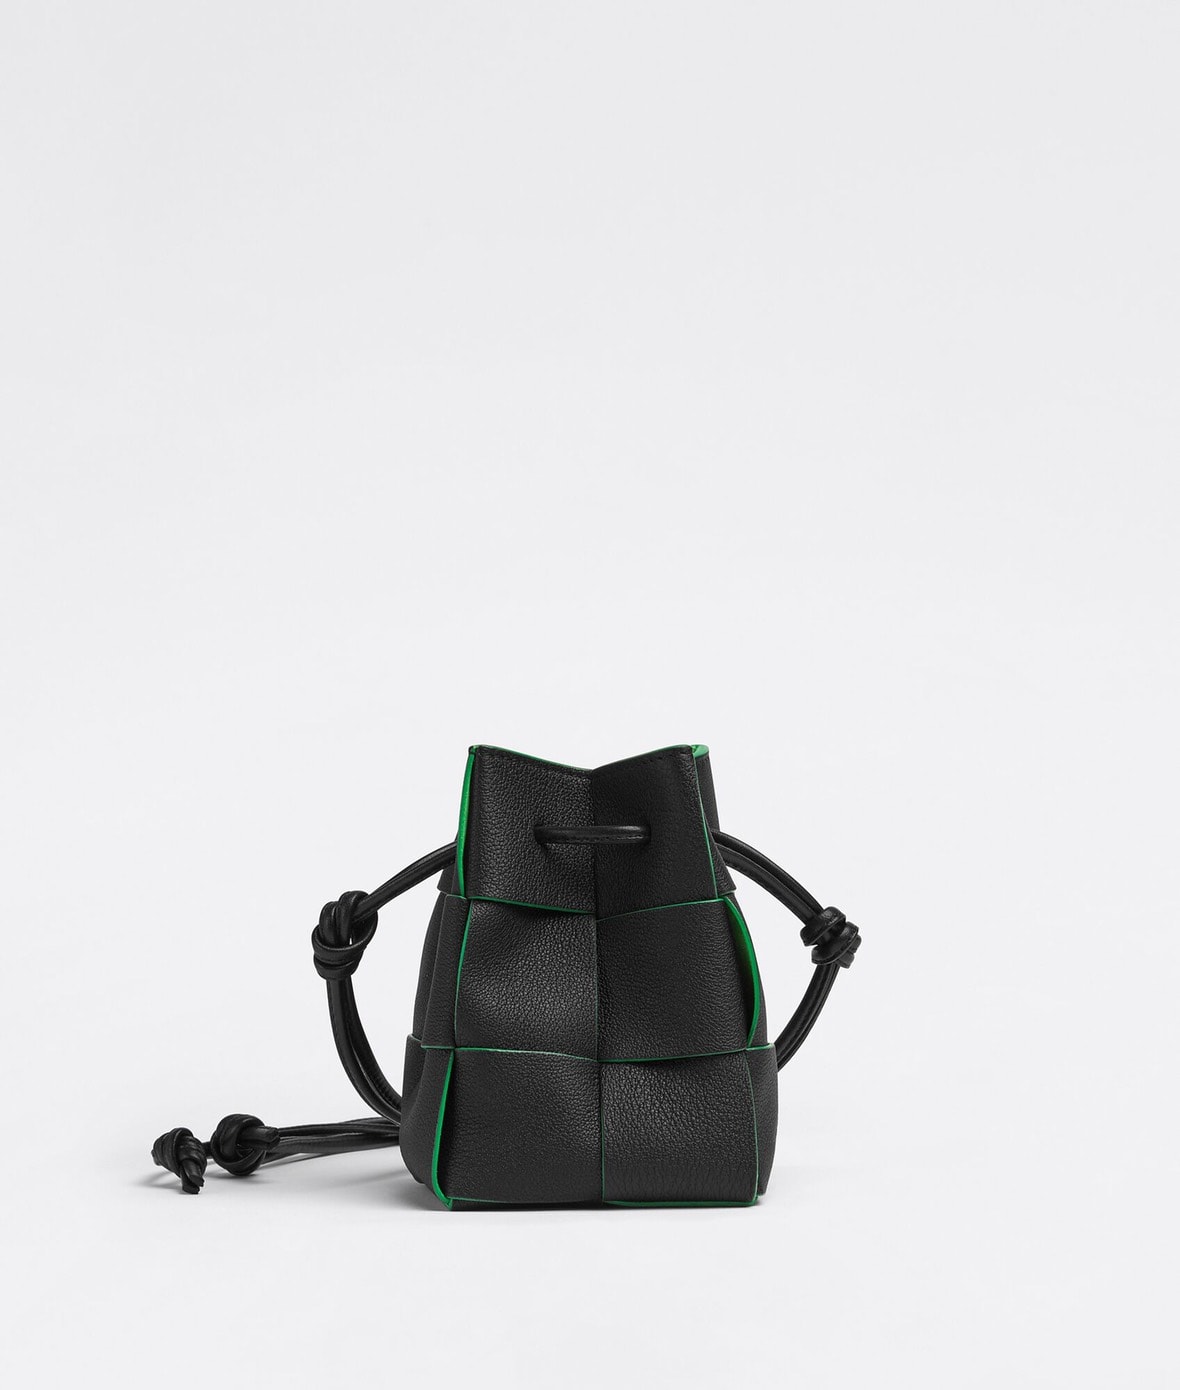 Bottega Veneta Fun leather Collection handbags 2022